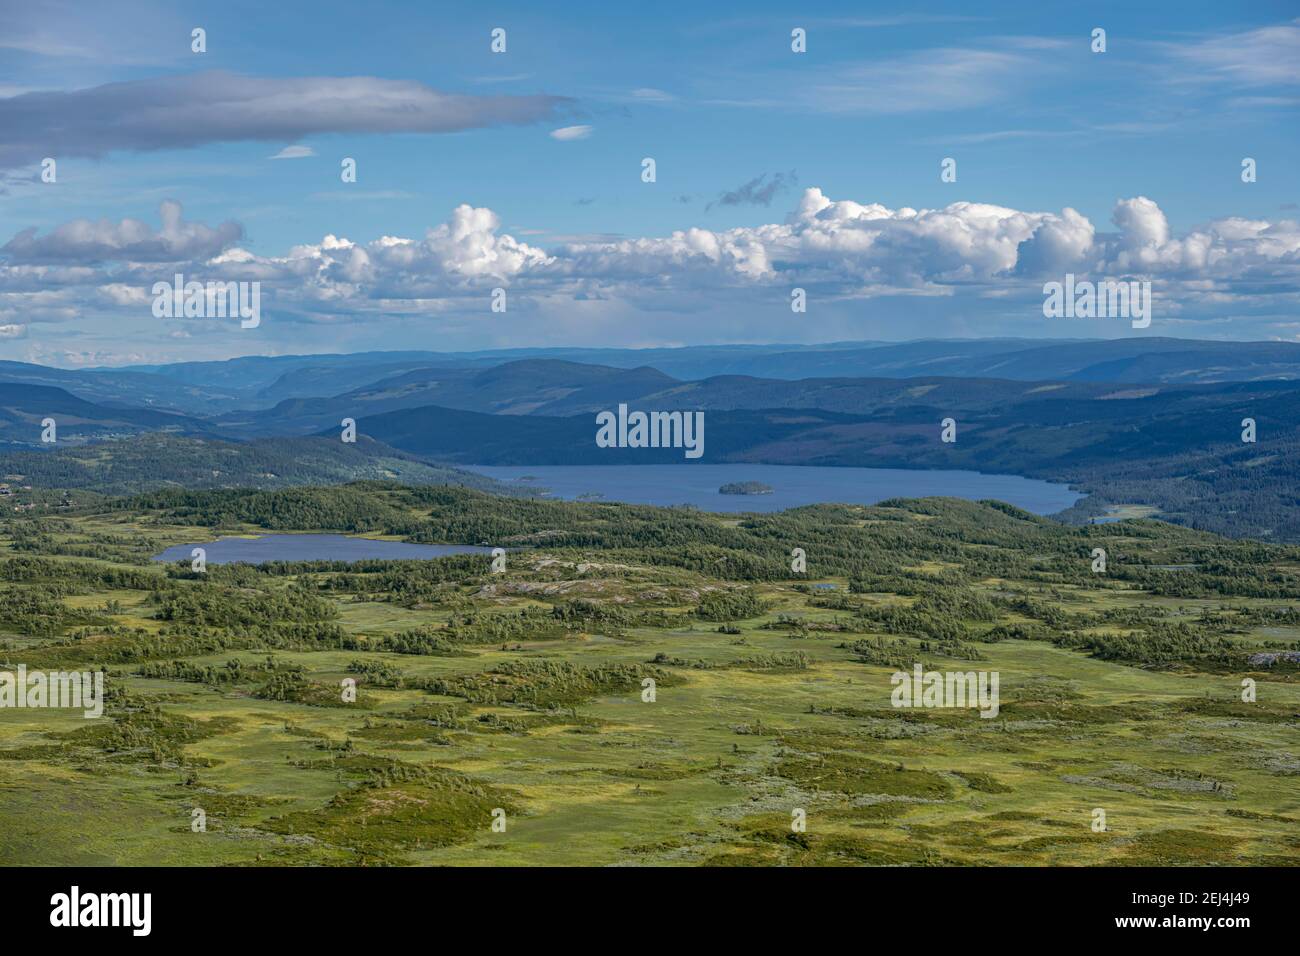 Tundra, hilly landscape with lakes, Oystre Slidre, Jotunheimen National Park, Norwege Stock Photo